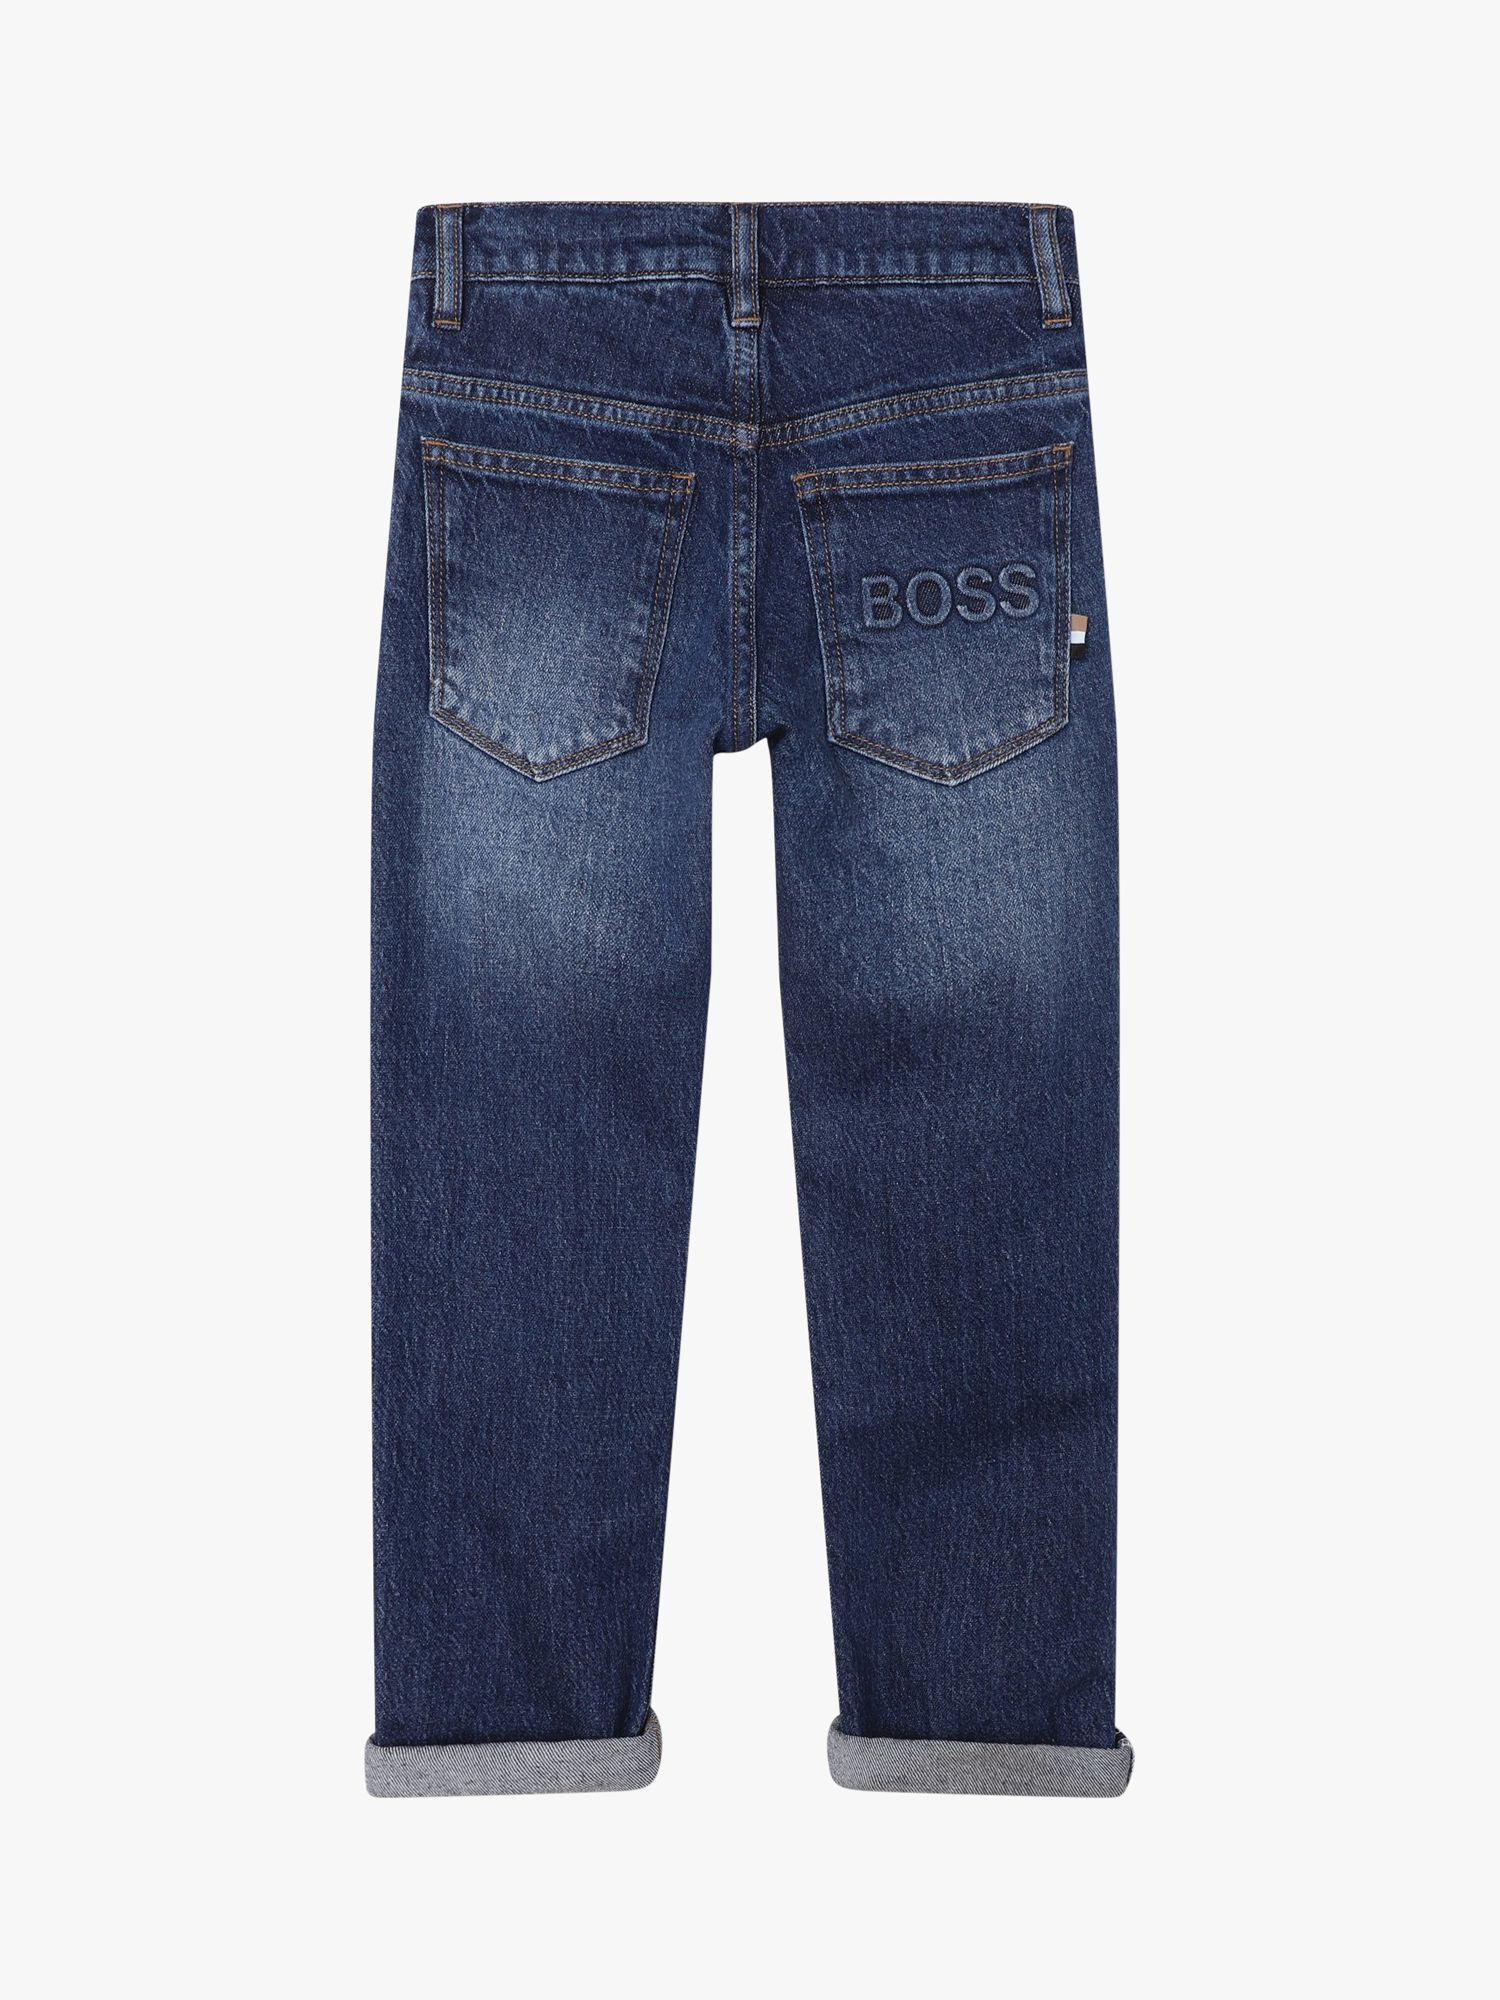 BOSS Boy's Logo Embossed Pocket Jeans, Blue, 5 years